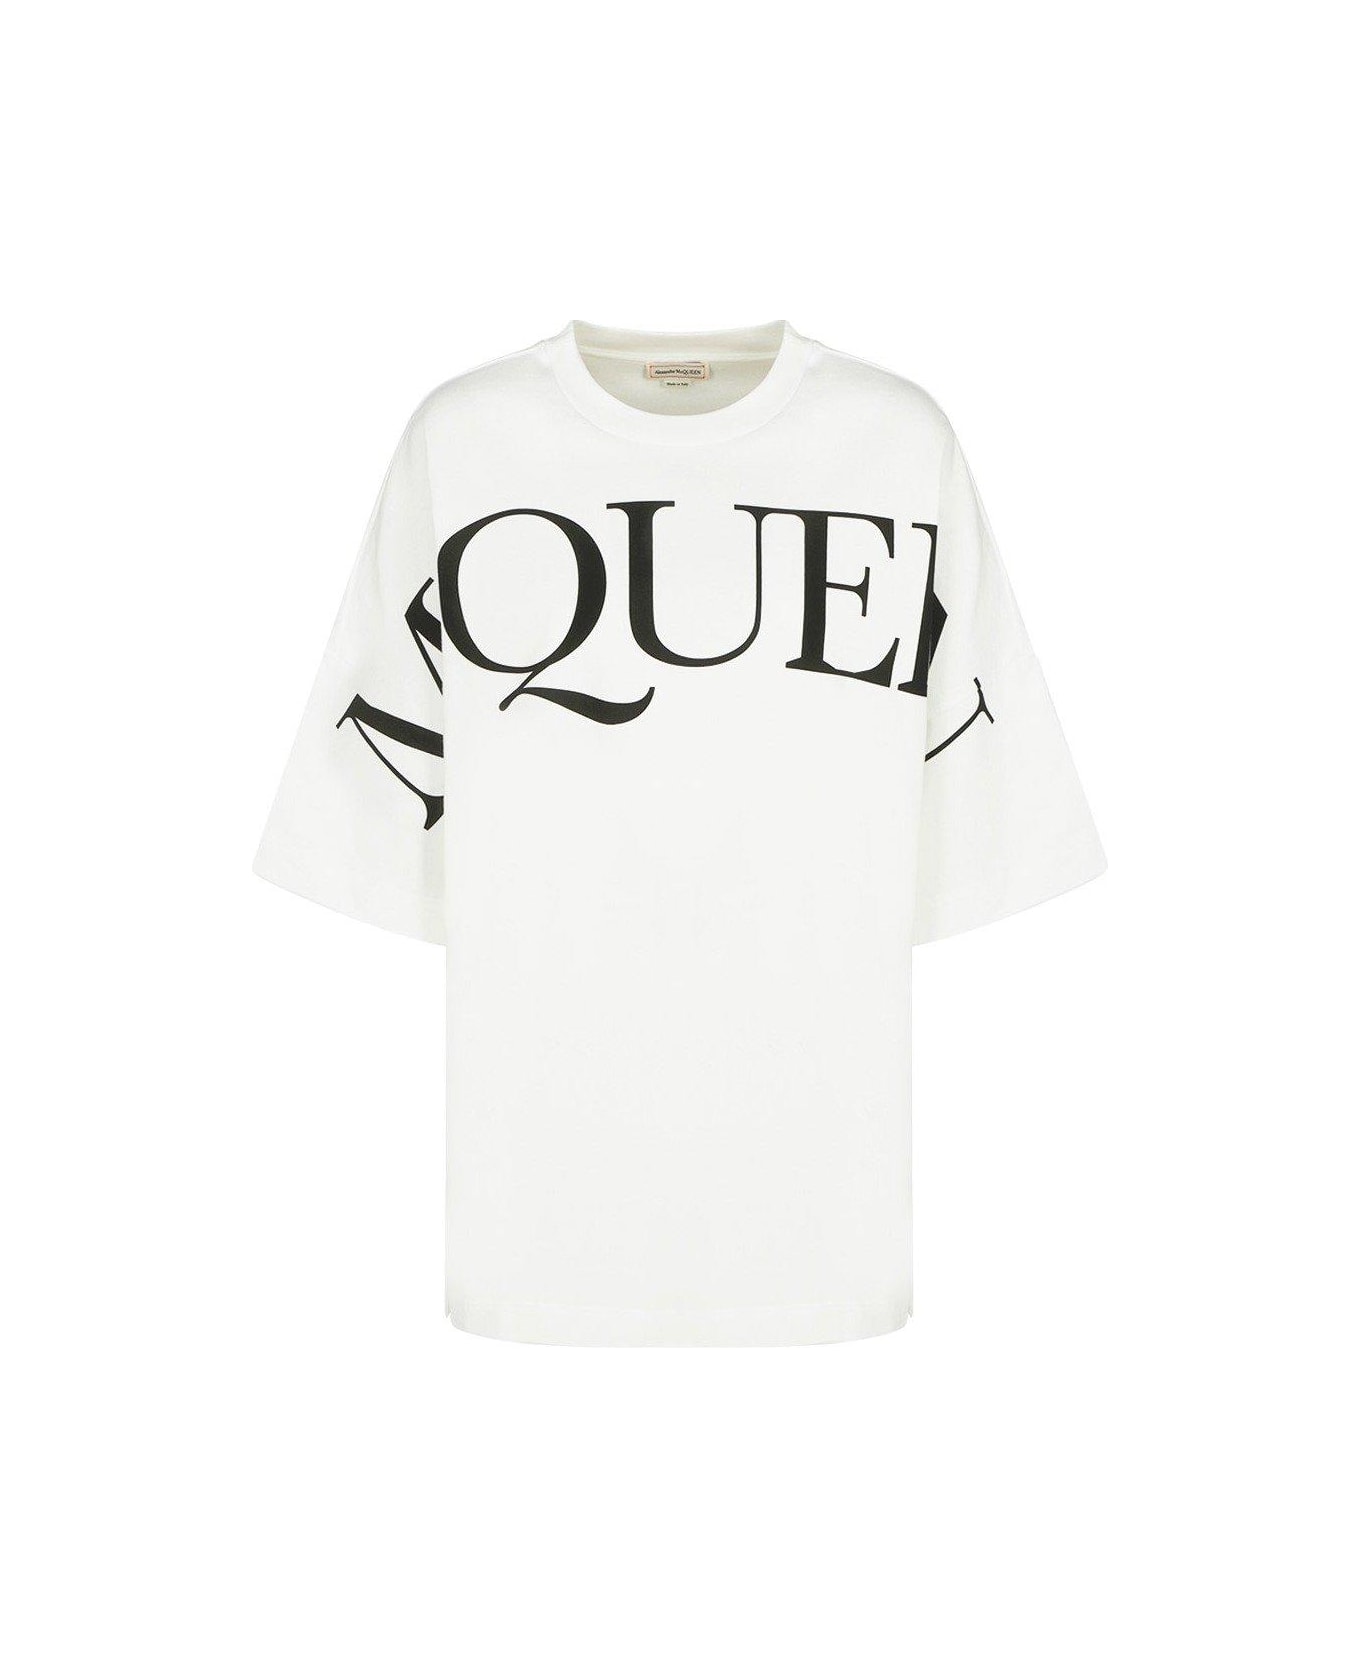 Alexander McQueen Logo Printed Crewneck T-shirt - White